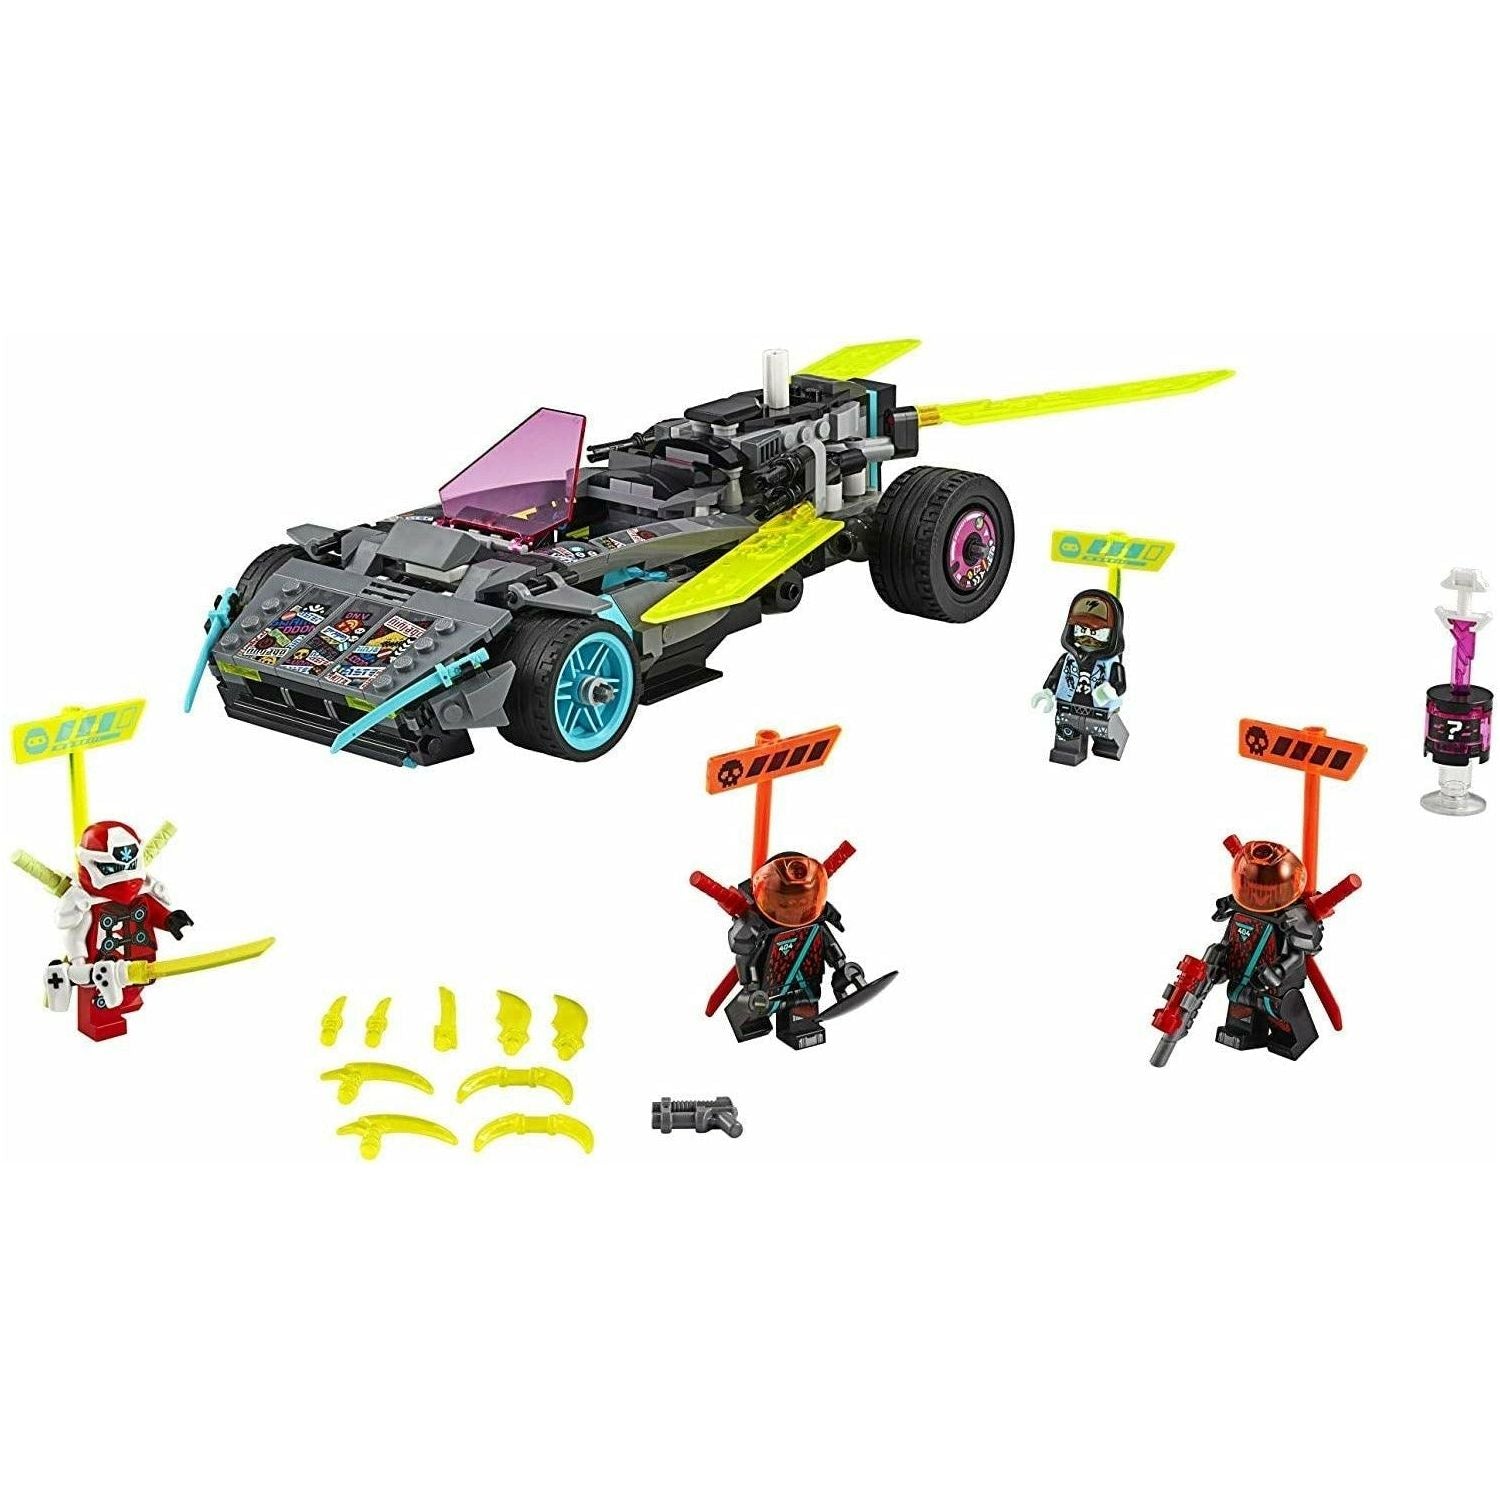 LEGO NINJAGO Ninja Tuner Car 71710 Toy Car for Kids Building Kit (419 Pieces) - BumbleToys - 8+ Years, 8-13 Years, Boys, LEGO, Ninjago, OXE, Pre-Order